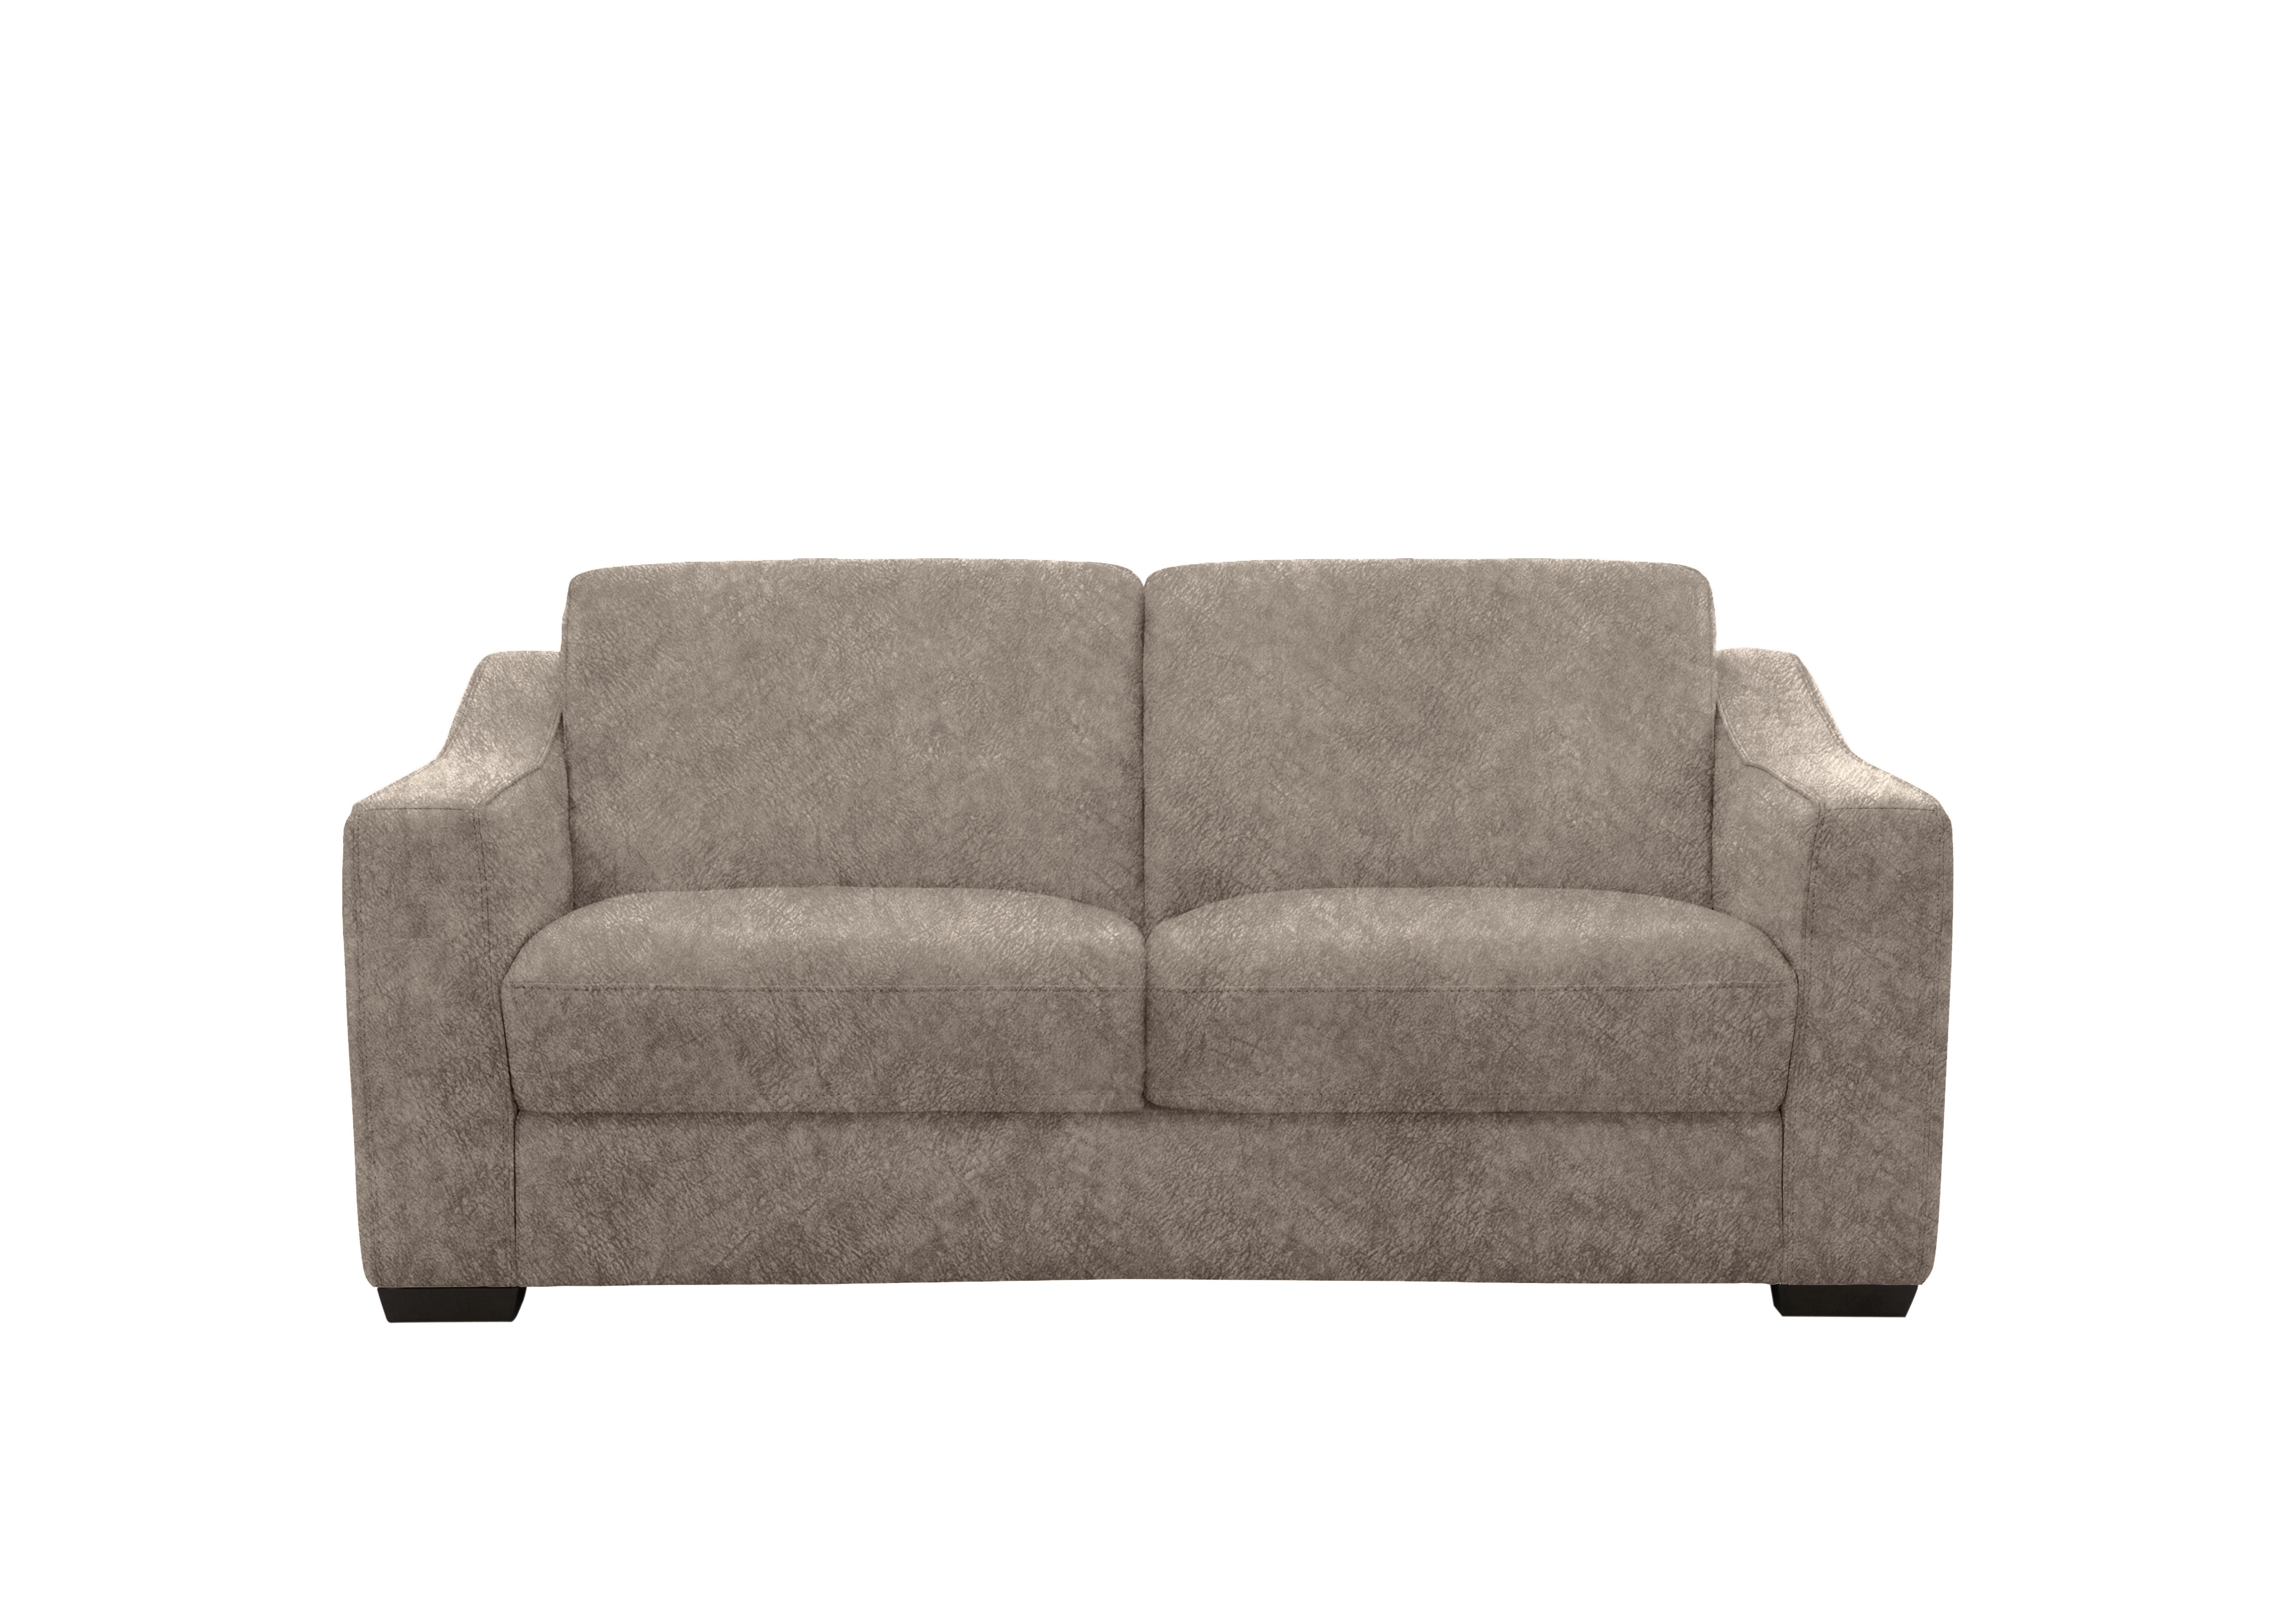 Optimus 2 Seater Fabric Sofa in Bfa-Bnn-R29 Fv1 Mink on Furniture Village